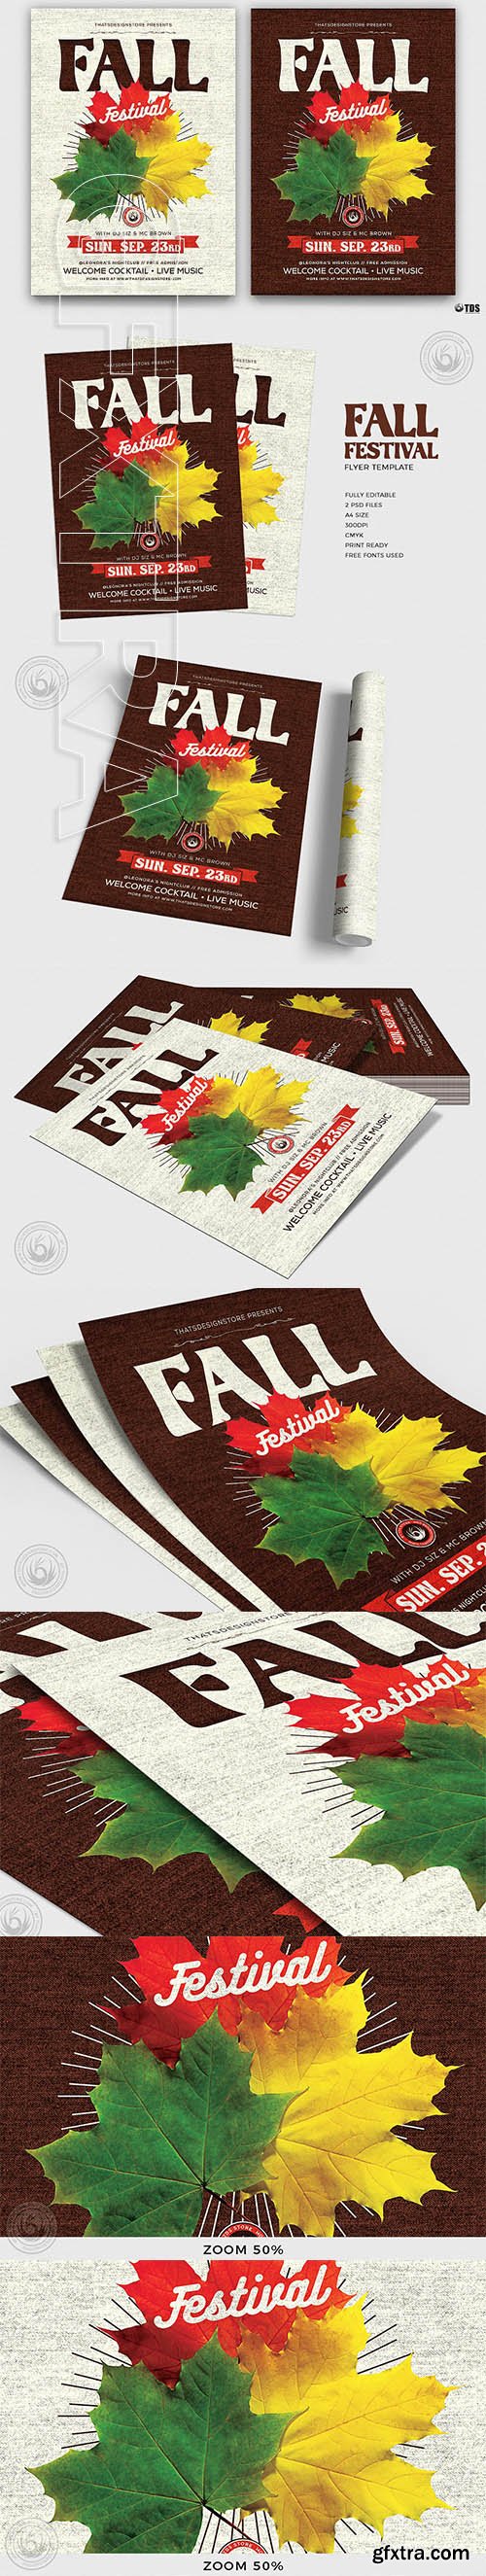 CreativeMarket - Fall Festival Flyer Template 2847444